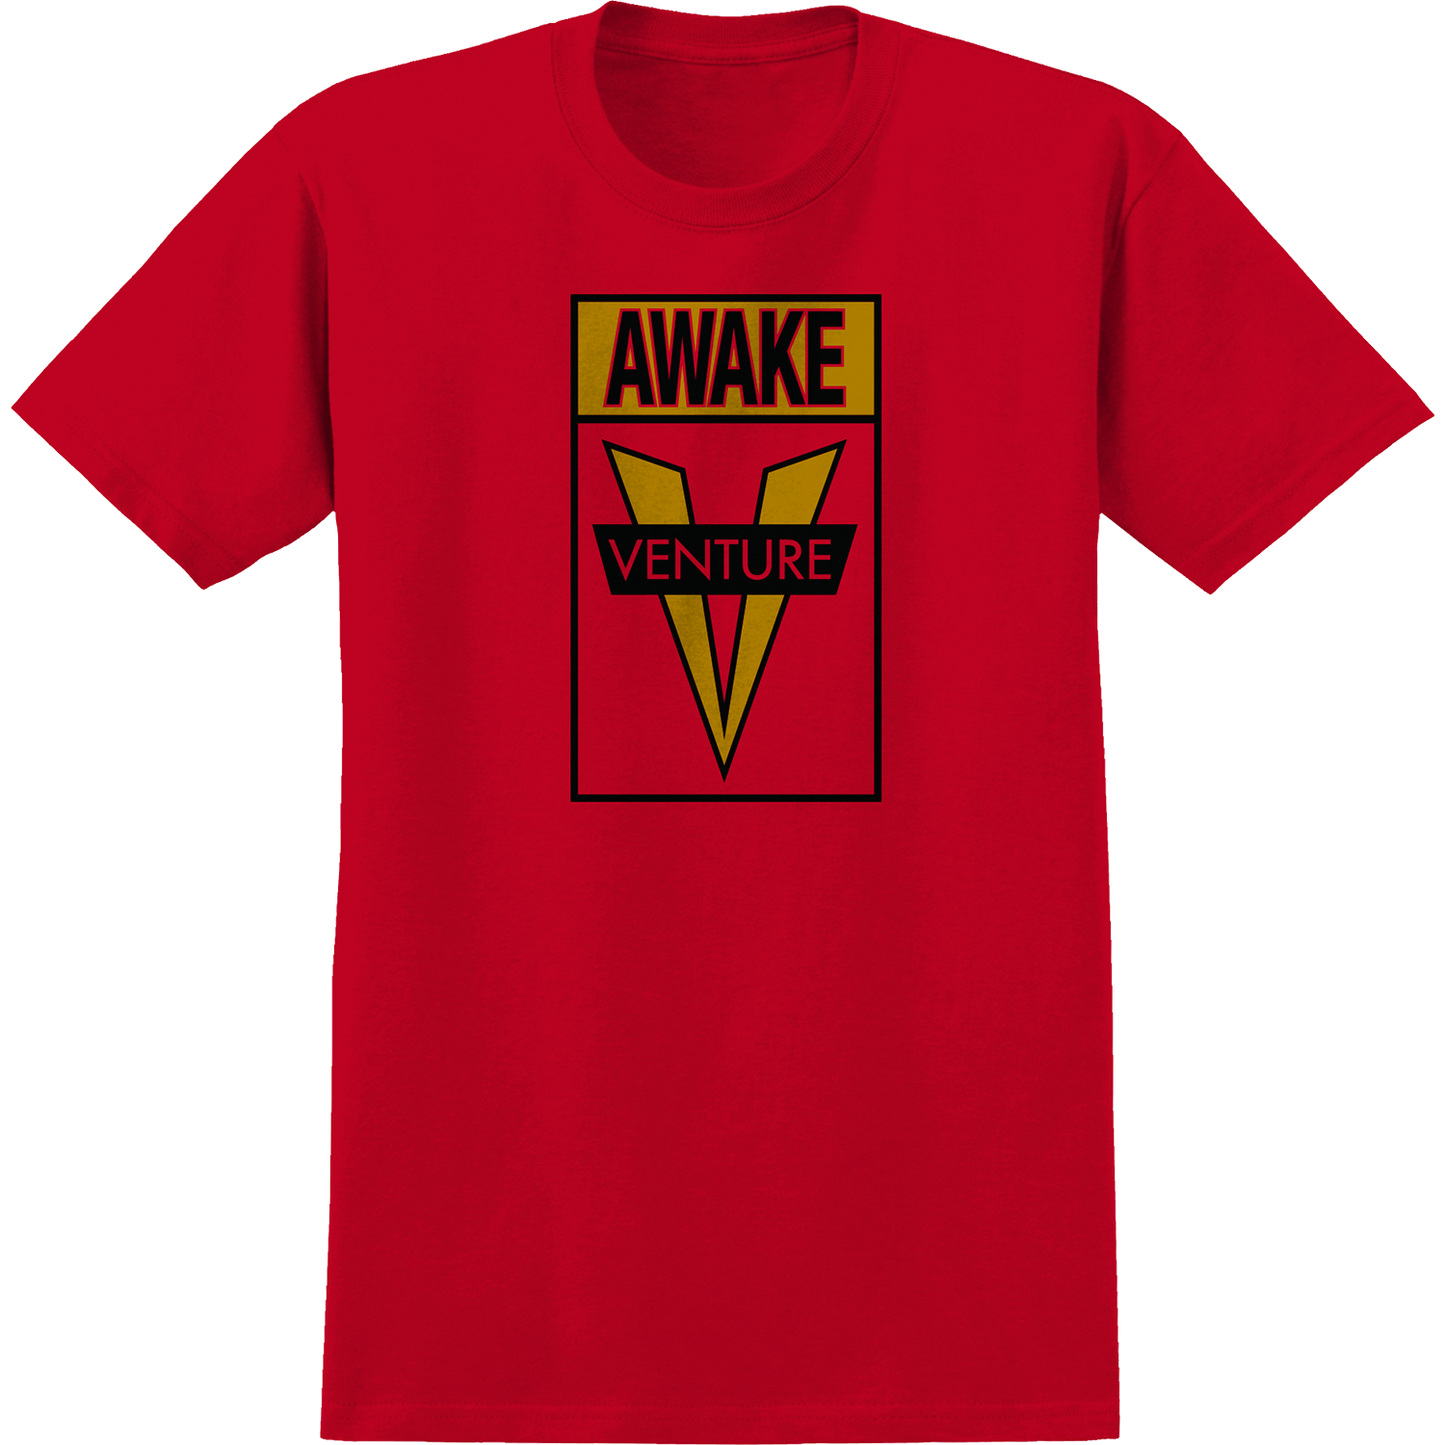 Venture Awake Short Sleeve T-Shirt - Size: SMALL Red/Gold